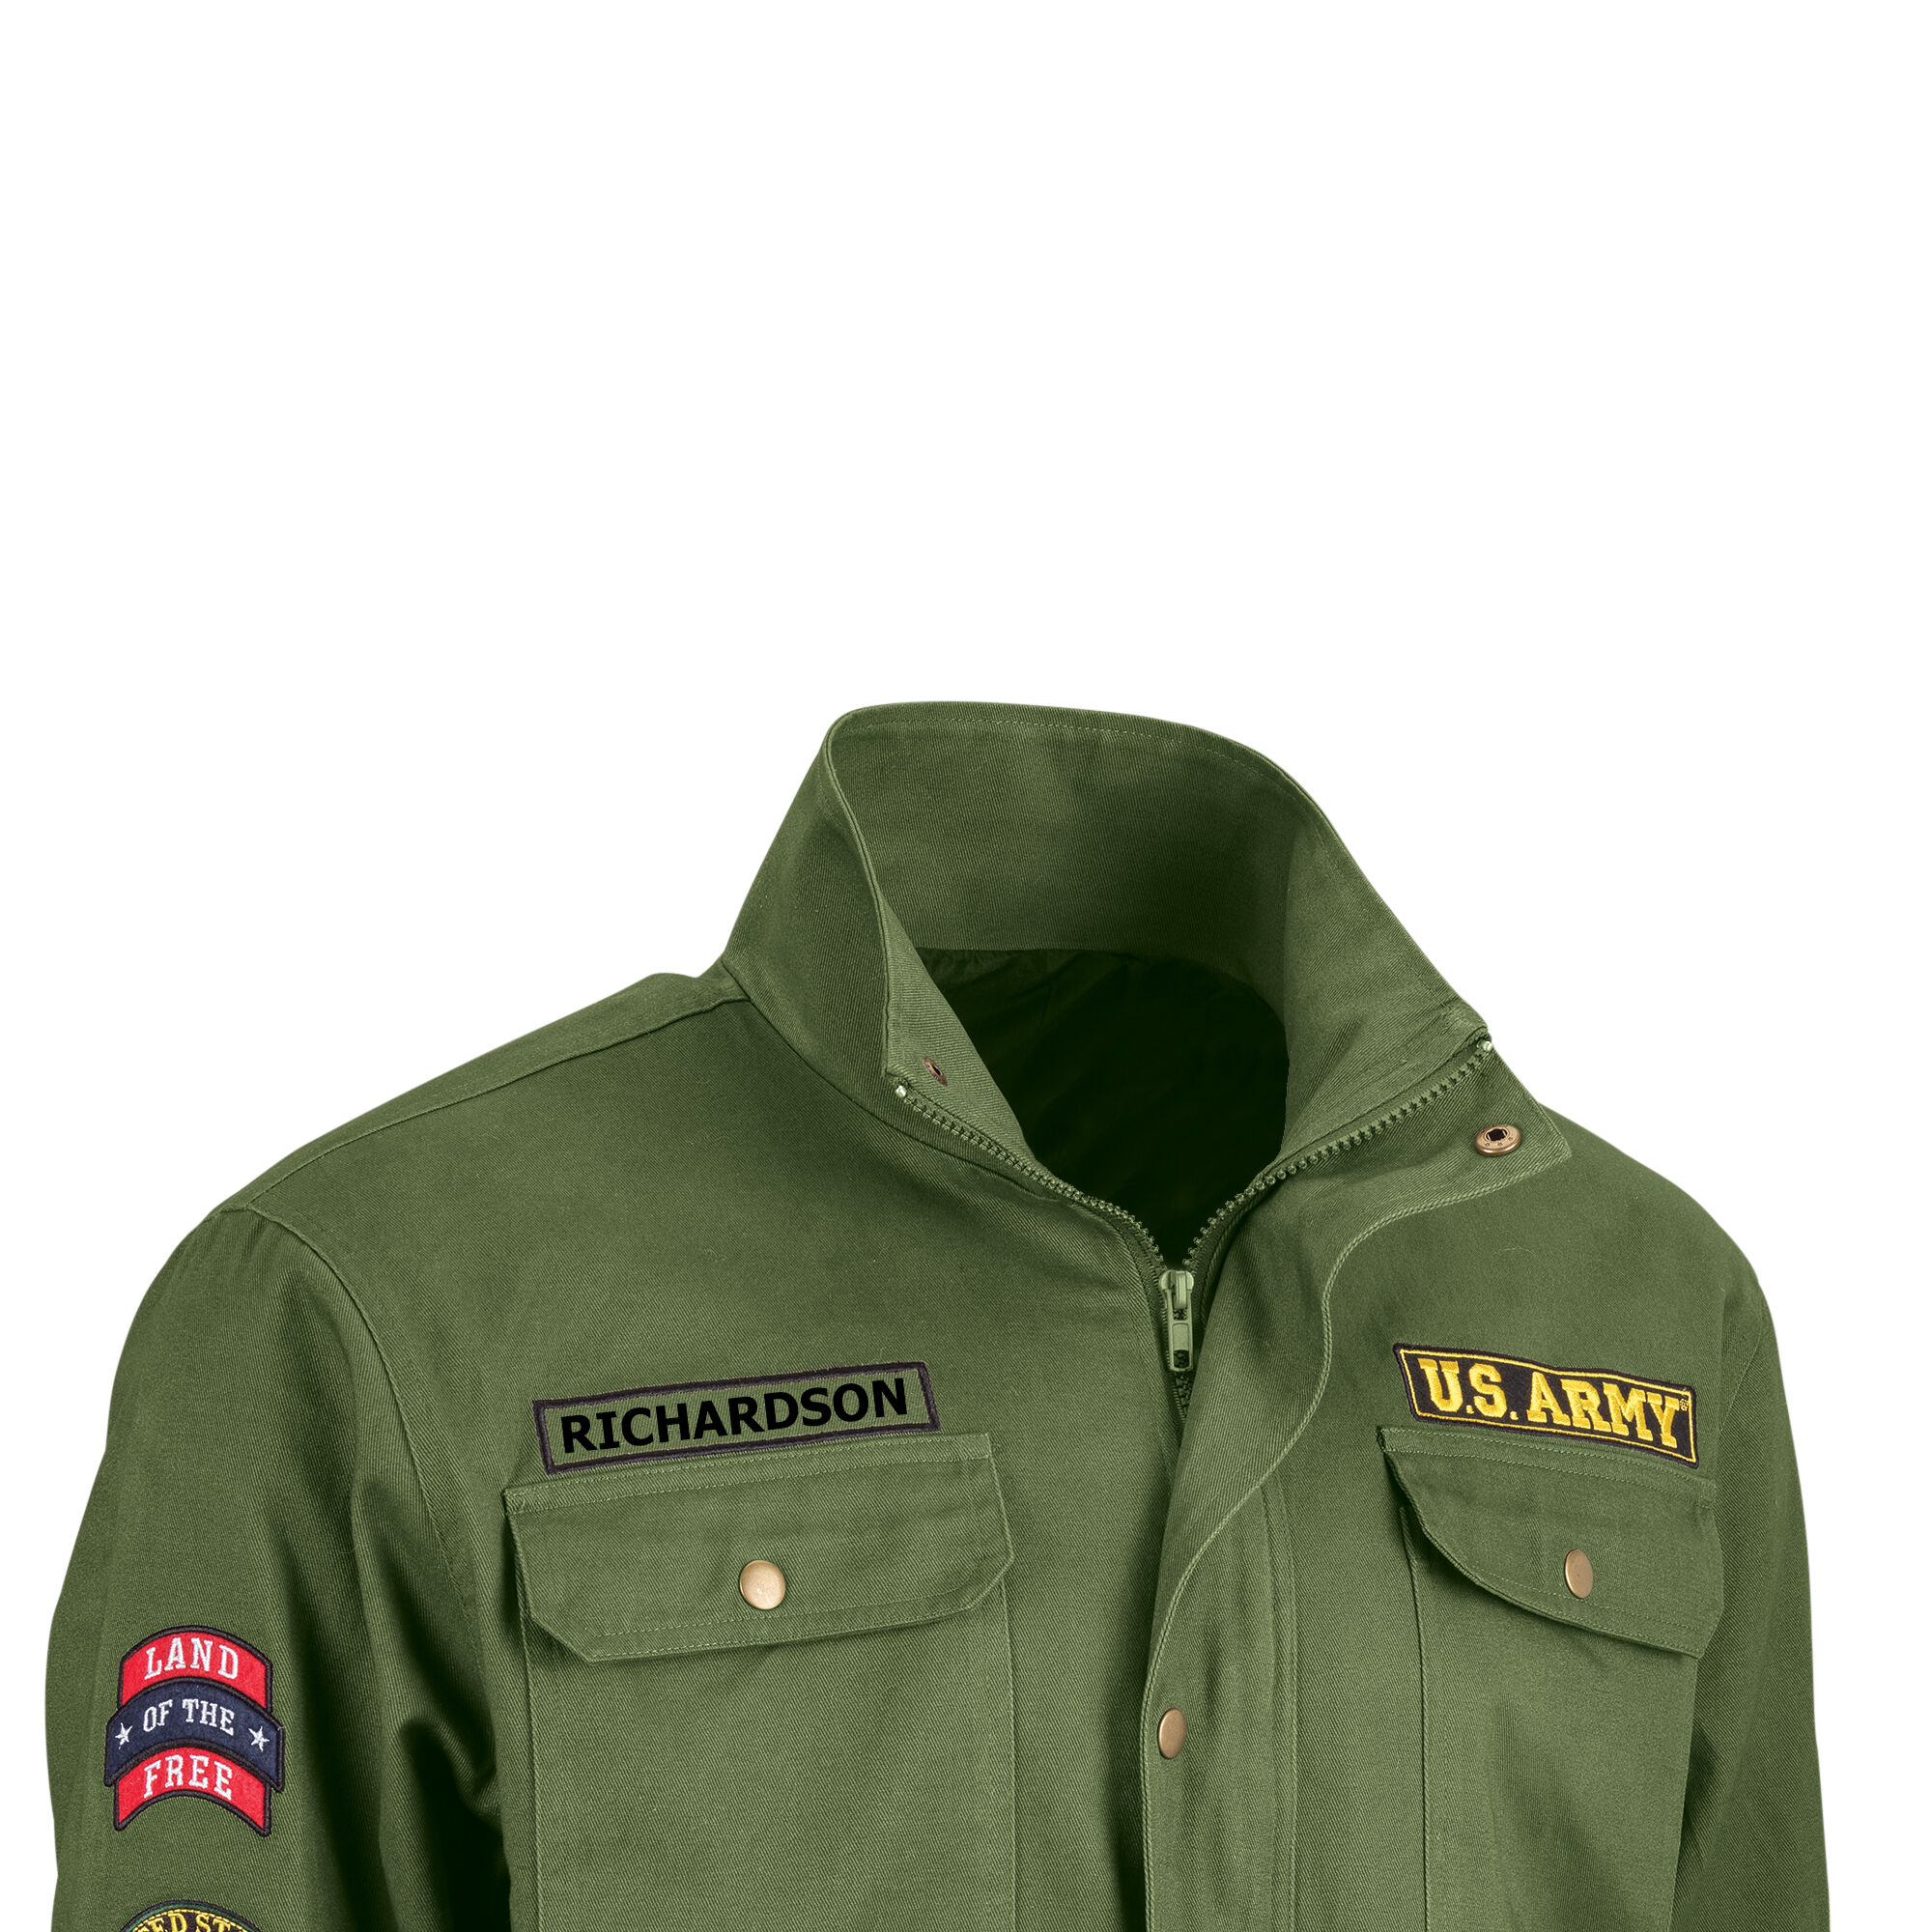 Personalized US Army Field Jacket 10539 0017 e closeup